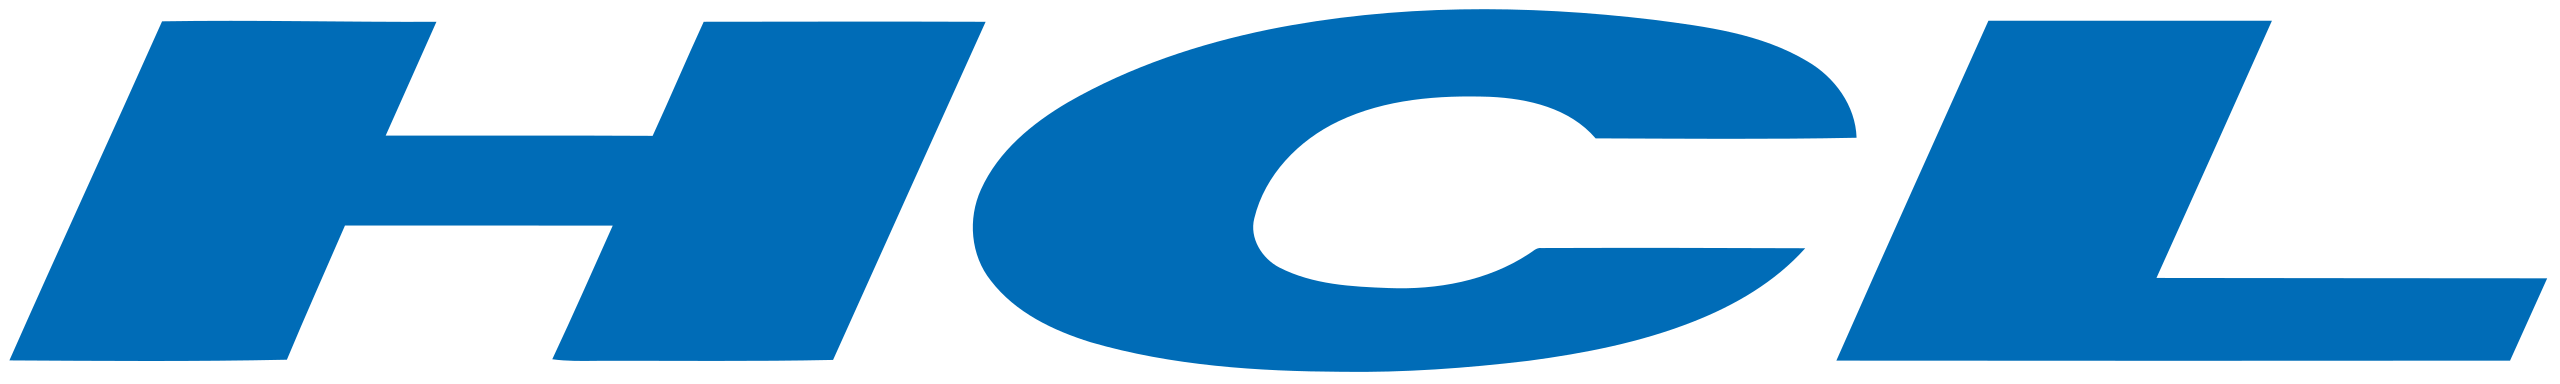 HCL_Technologies_logo.svg_.png